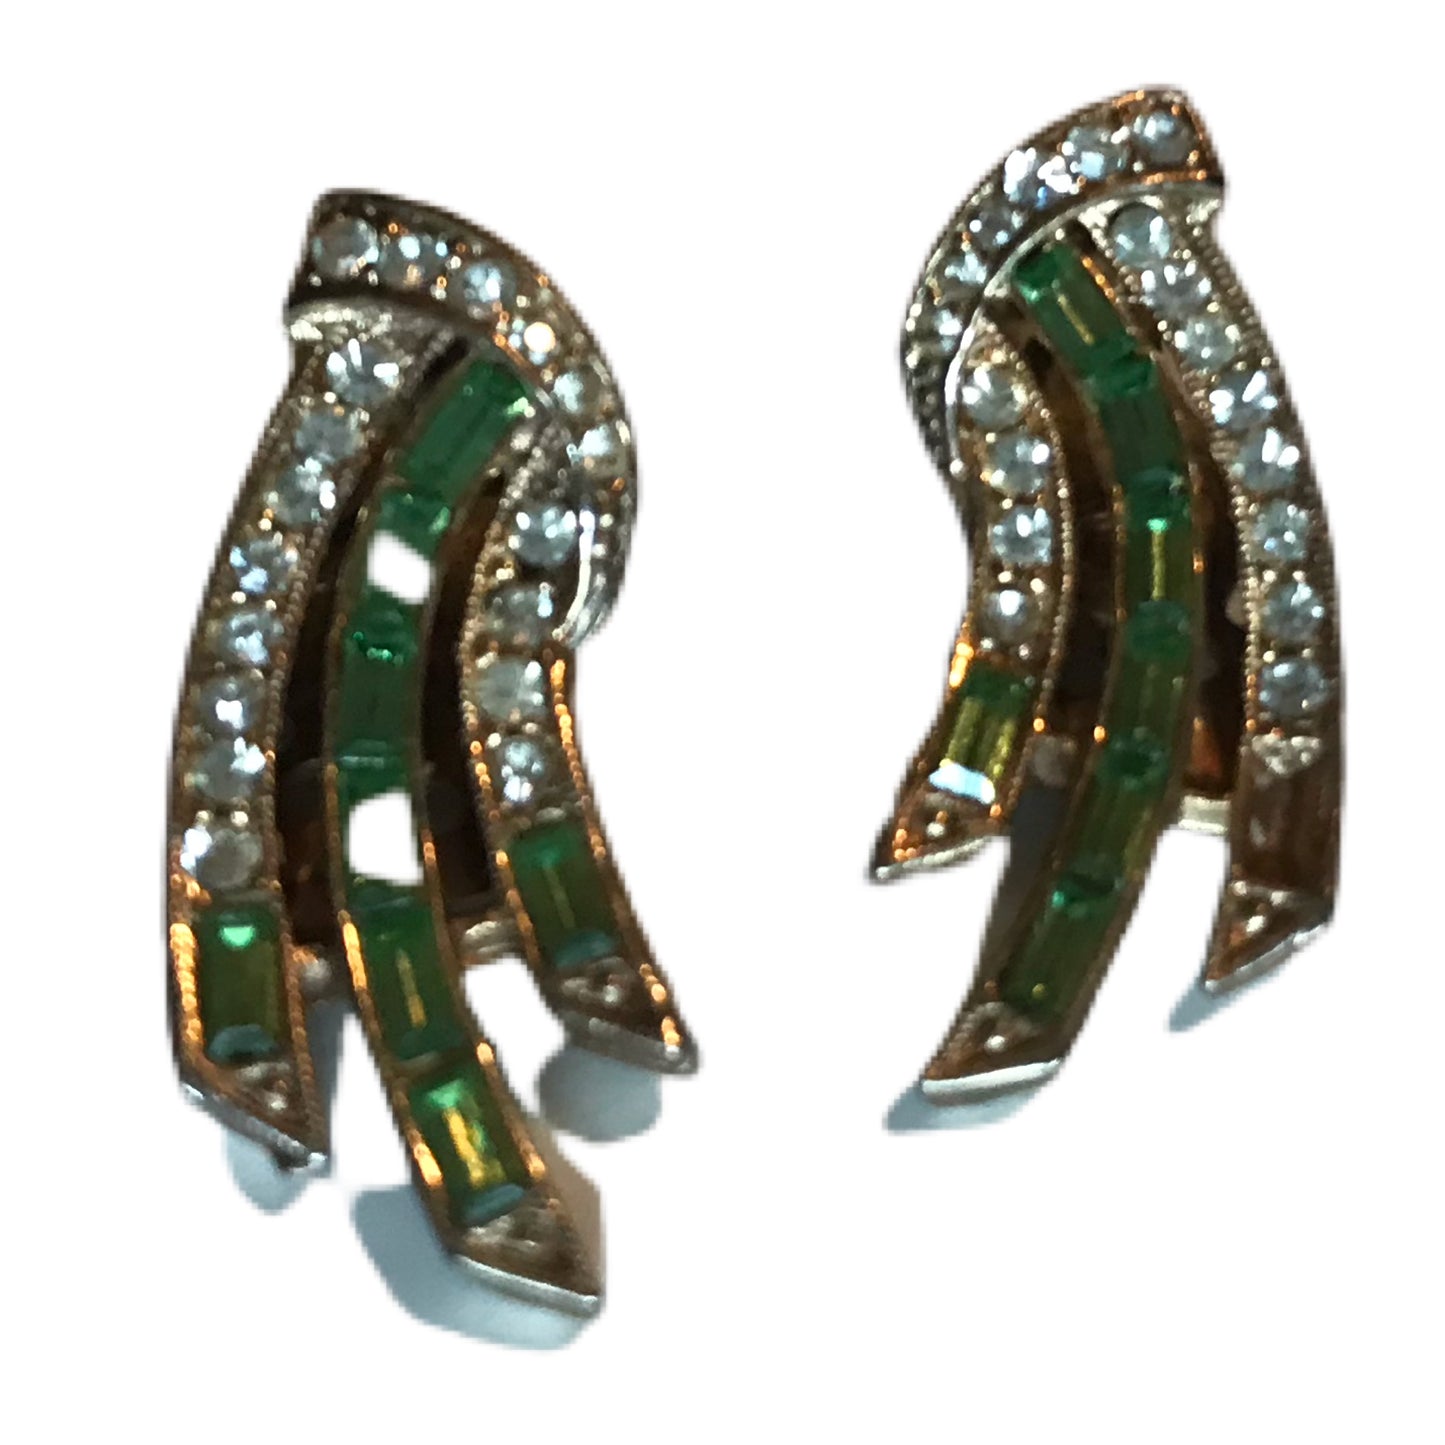 Citrine Green Bezel Set Rhinestone and Crystal Clip Earrings circa 1960s